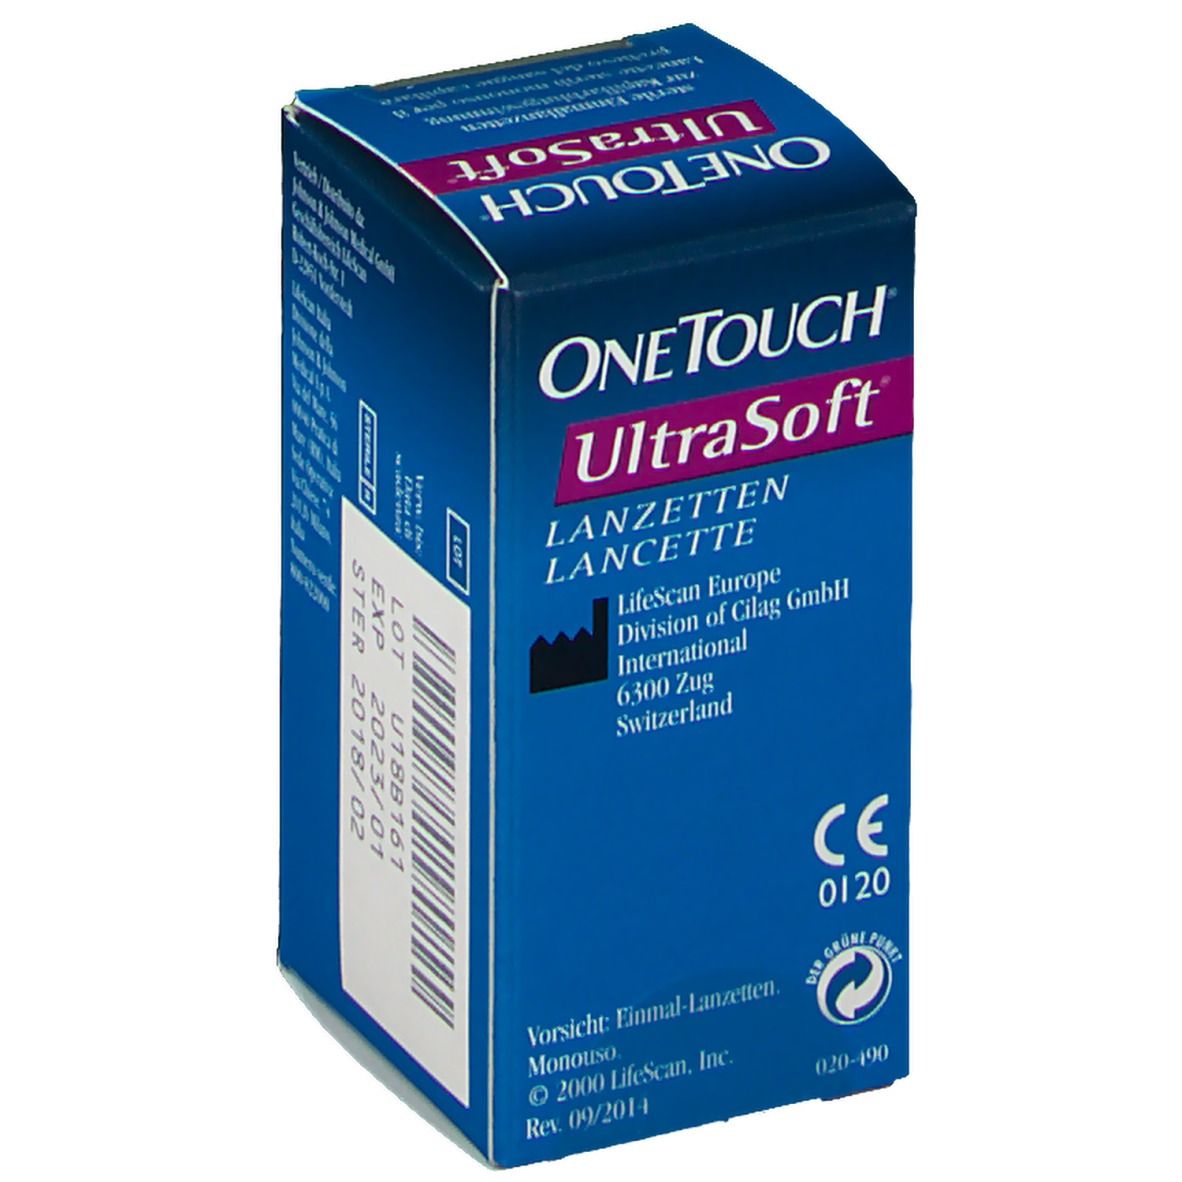 OneTouch® UltraSoft® Lancette